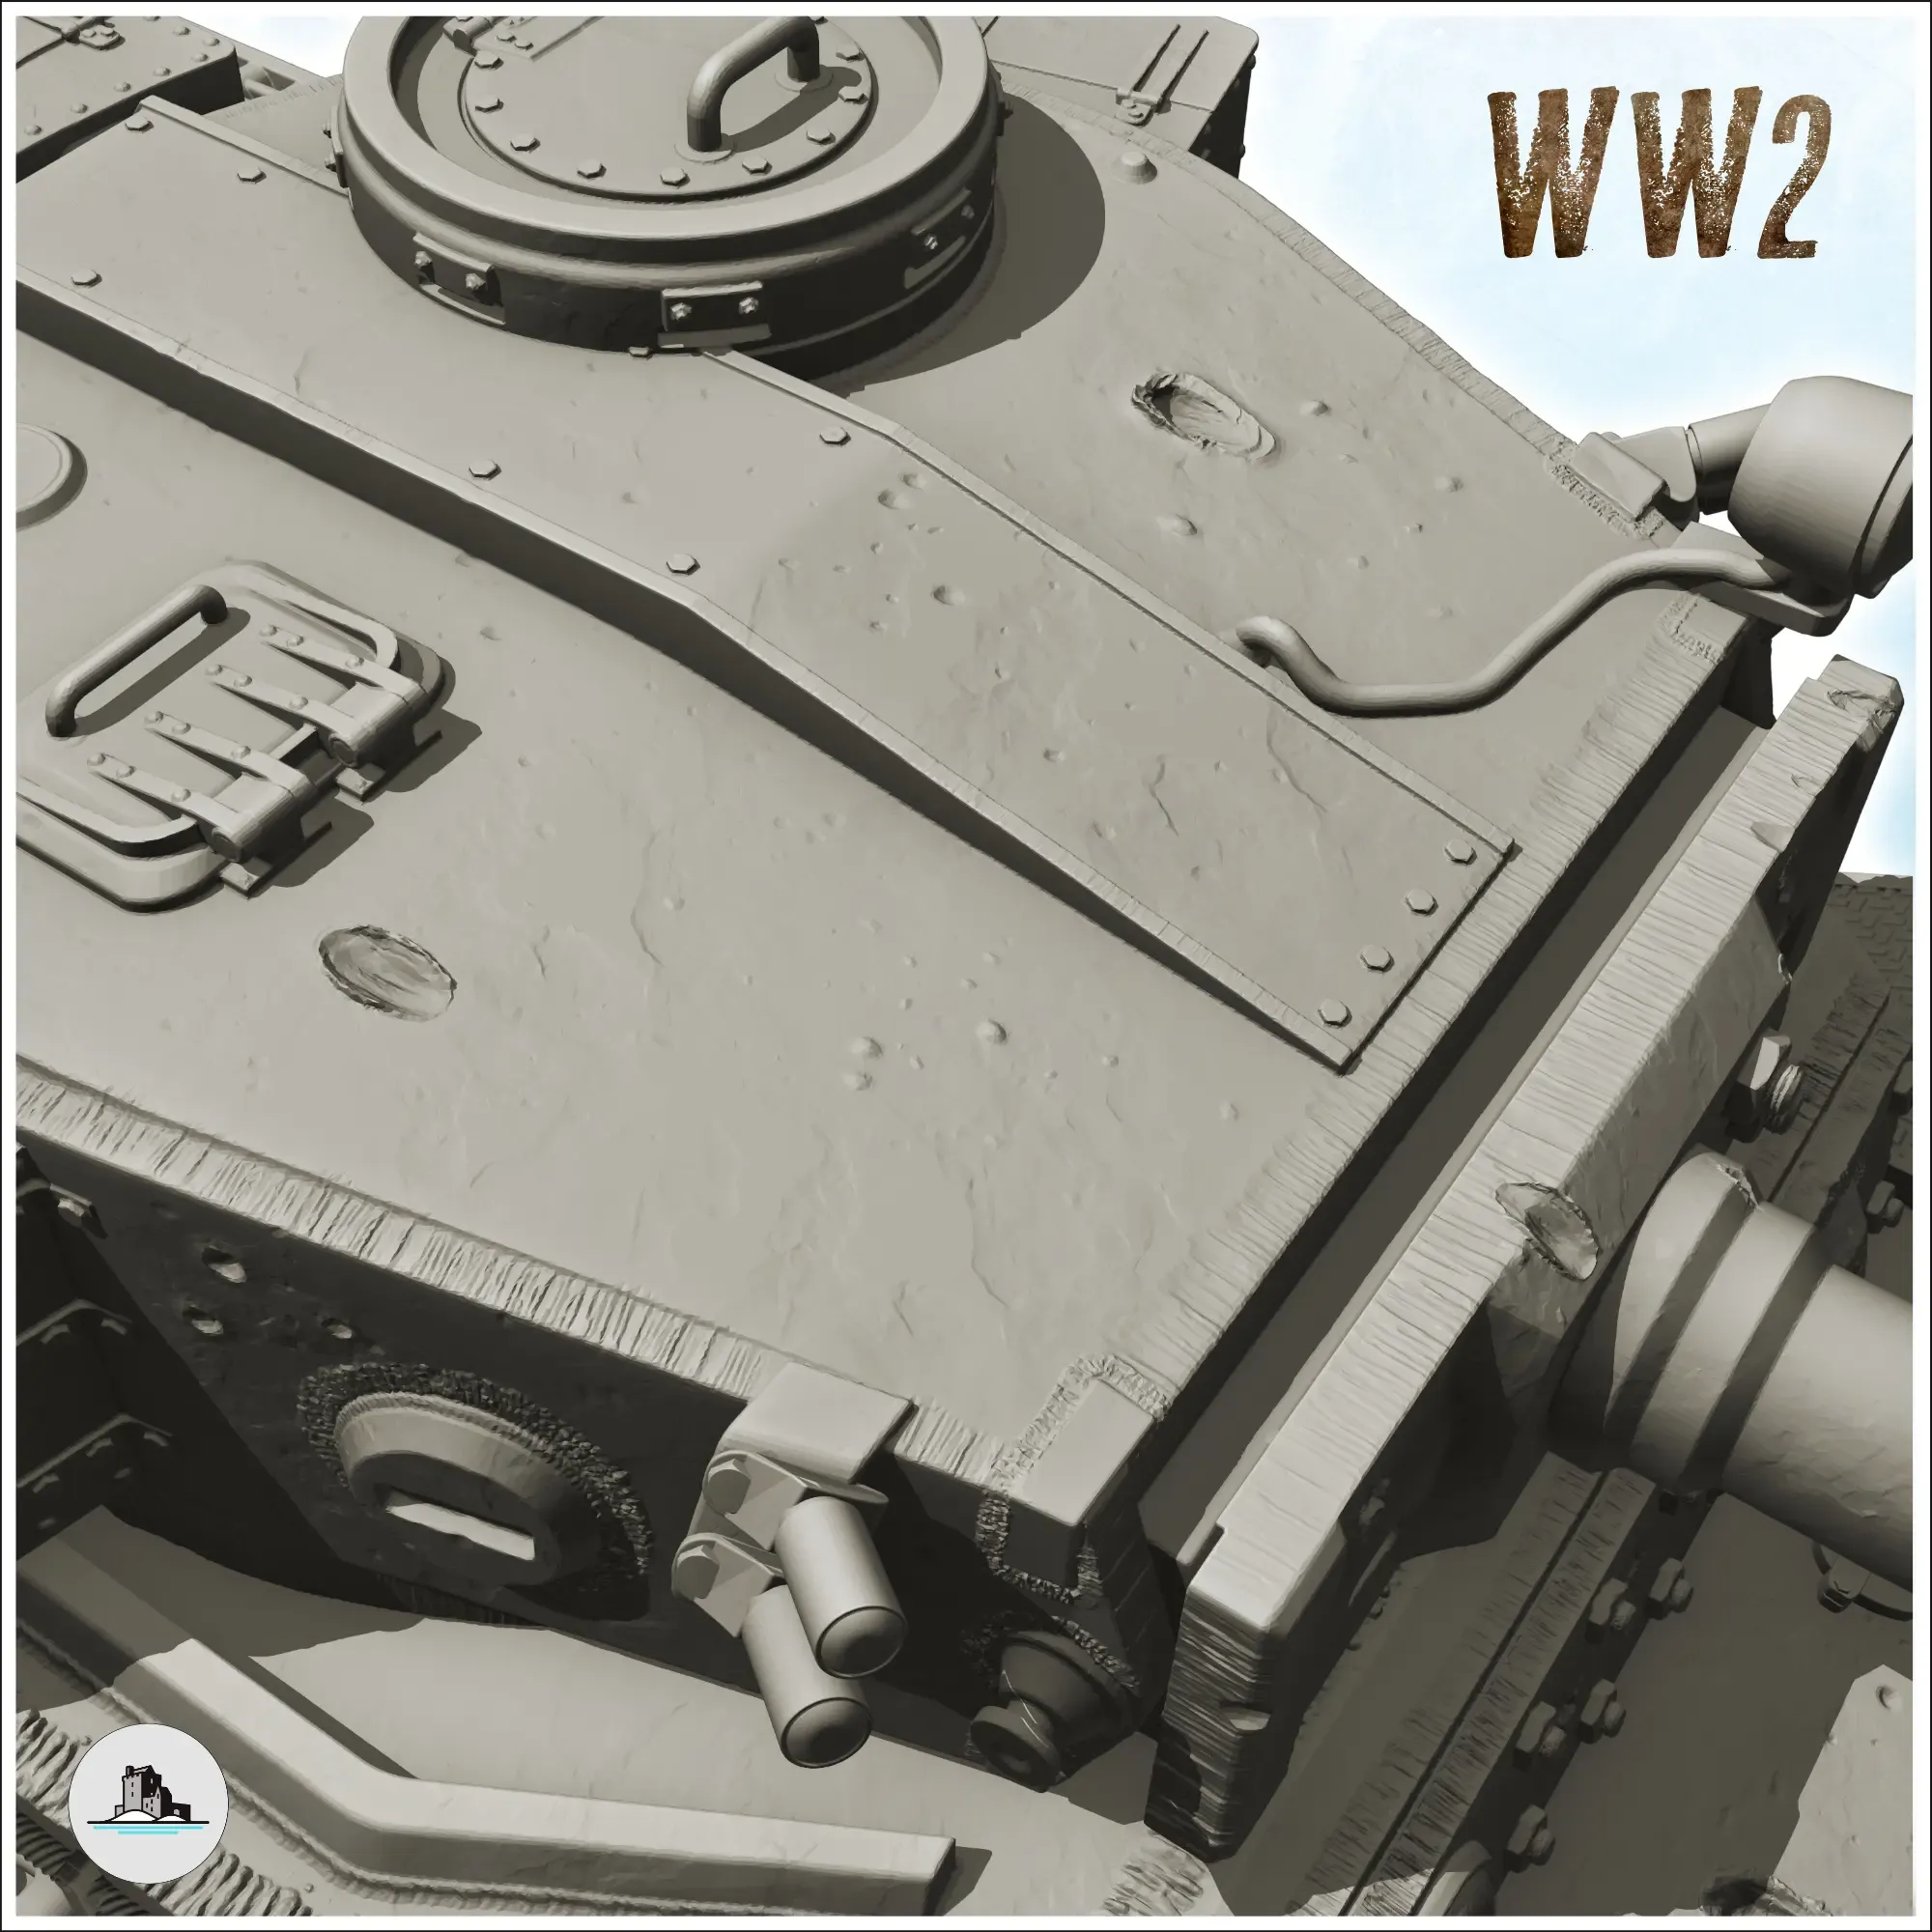 Panzer VI Tiger (P) - WW2 German Flames of War Bolt Action